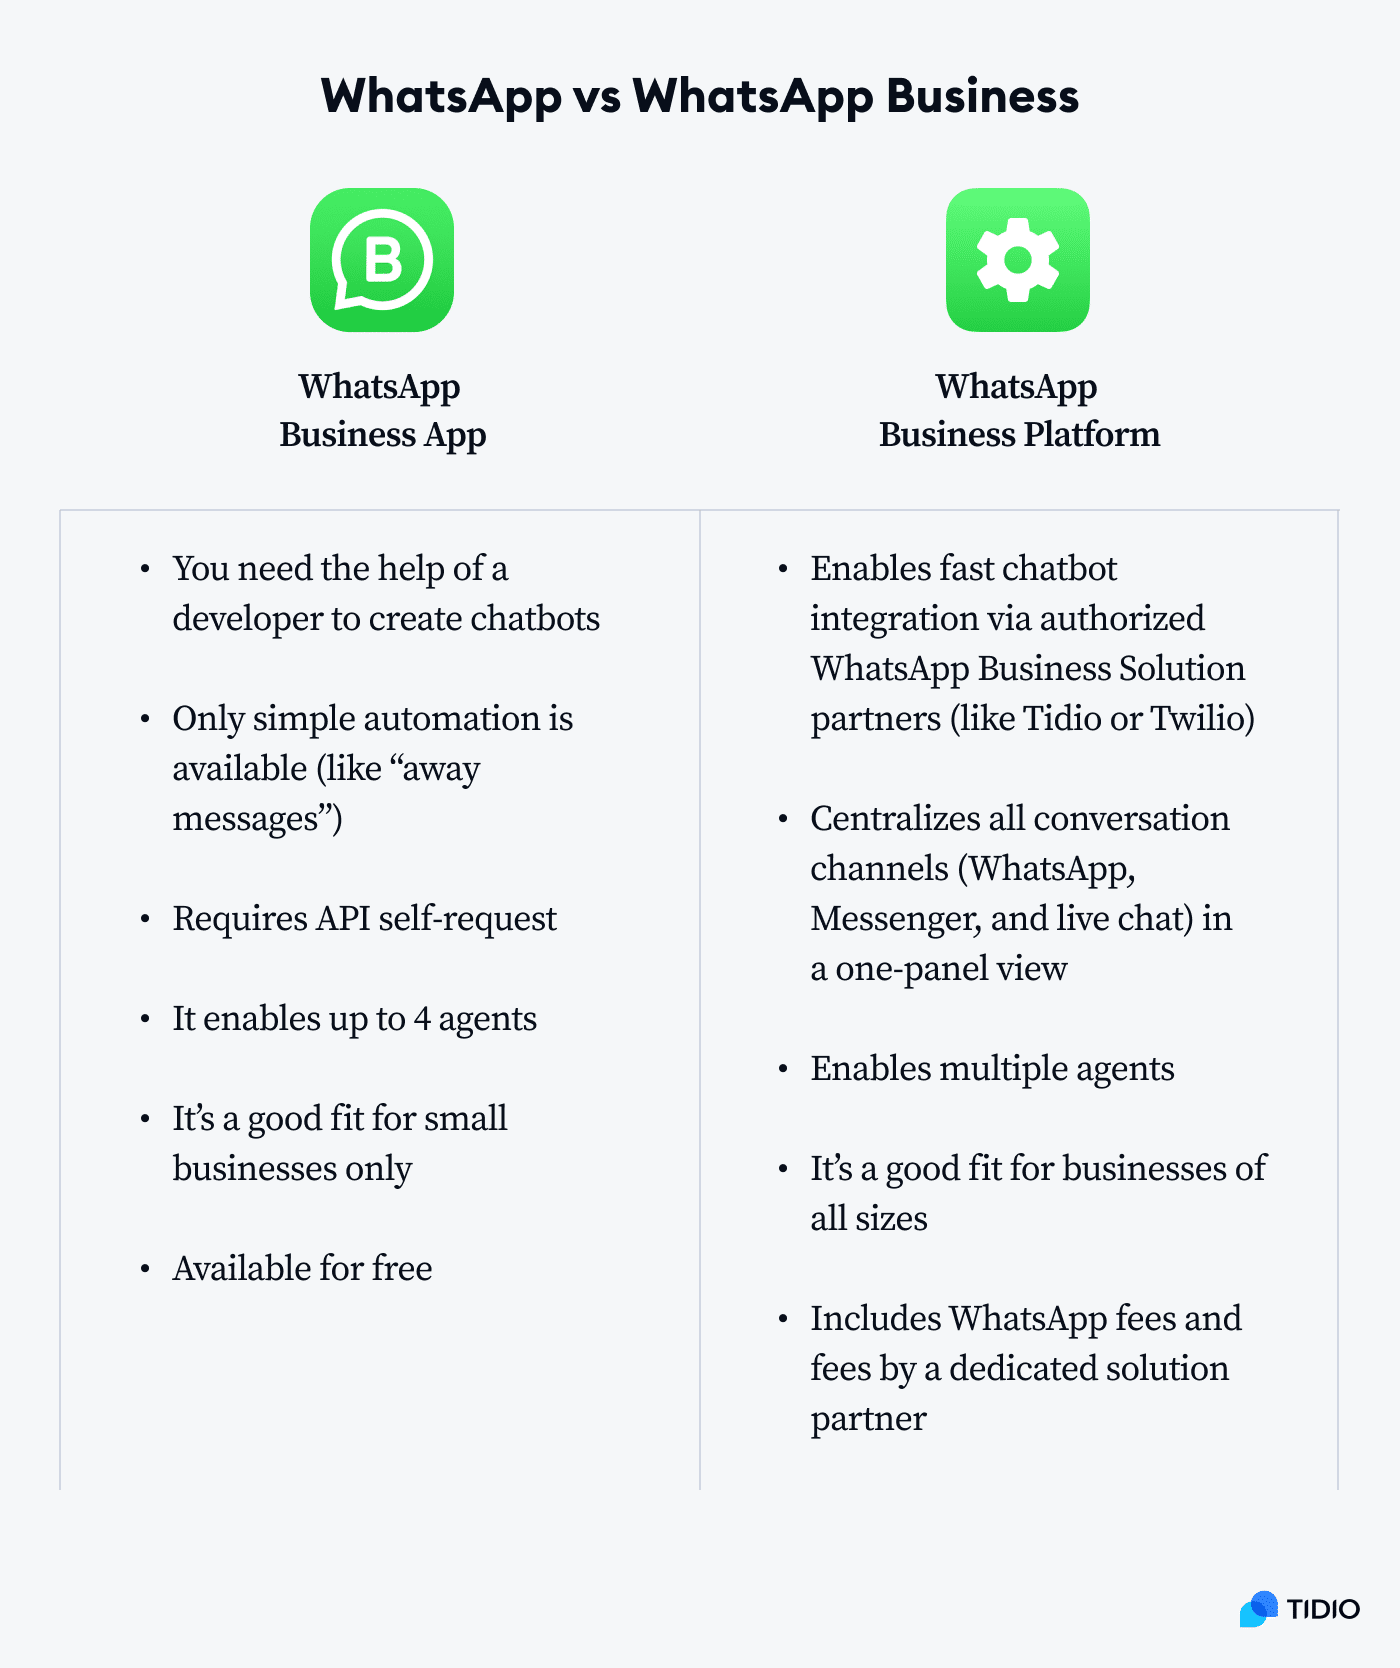 whatsapp vs whatsapp business comparison on image